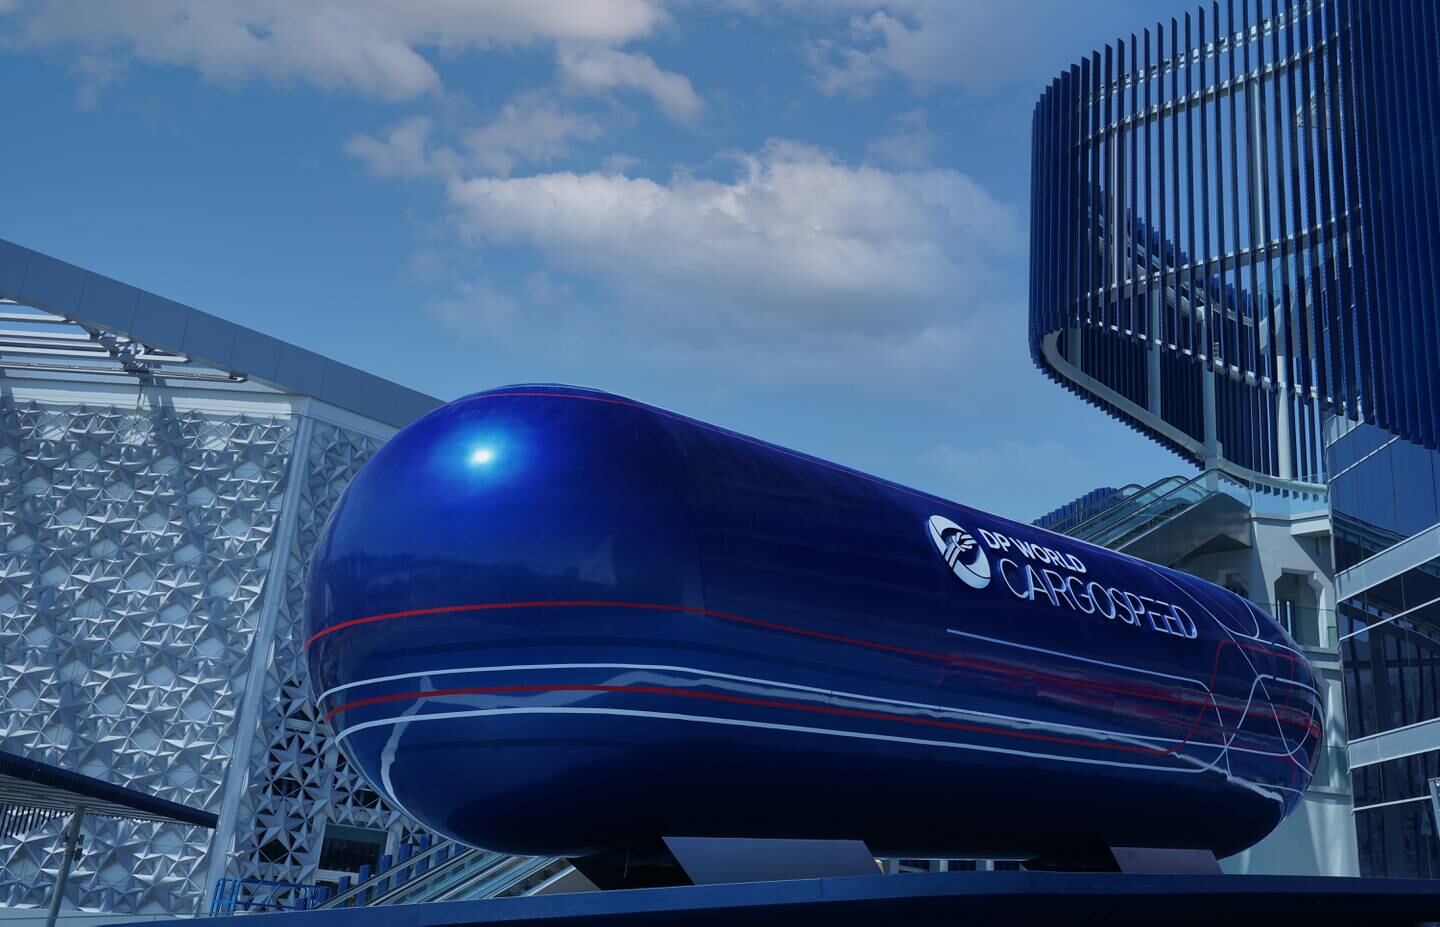 The Hyperloop pod at DP World's Expo pavilion. Hyperloop is poised to revolutionise the on-demand global logistics market. Photo: Courtesy Virgin Hyperloop